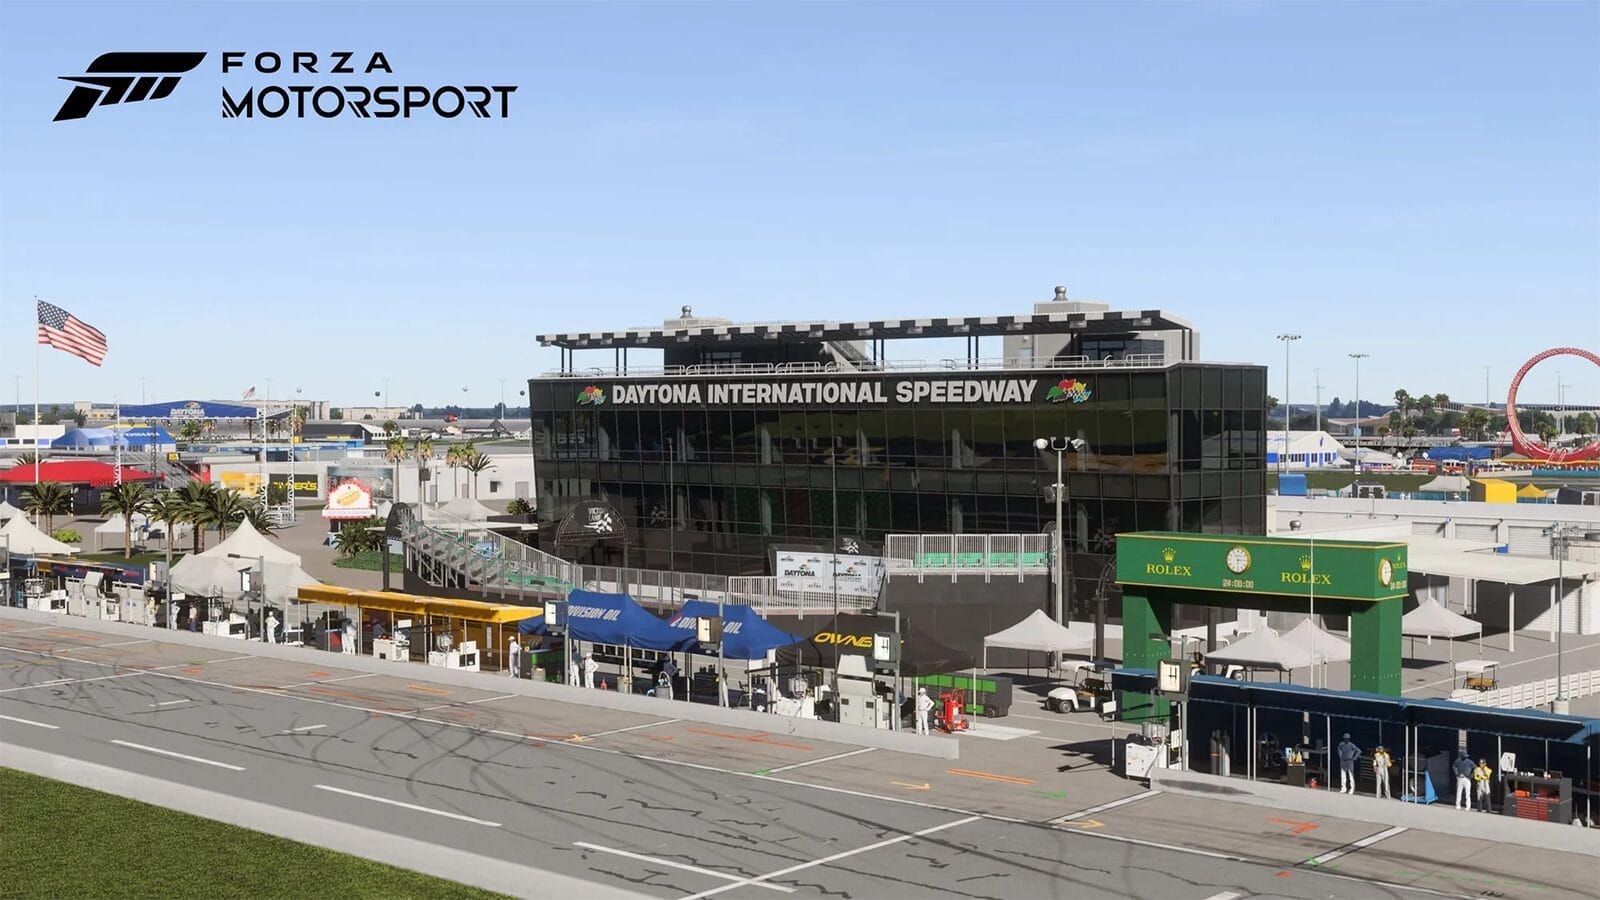 Forza Motorsport Update 4 Adds Daytona Oval & Road Course,